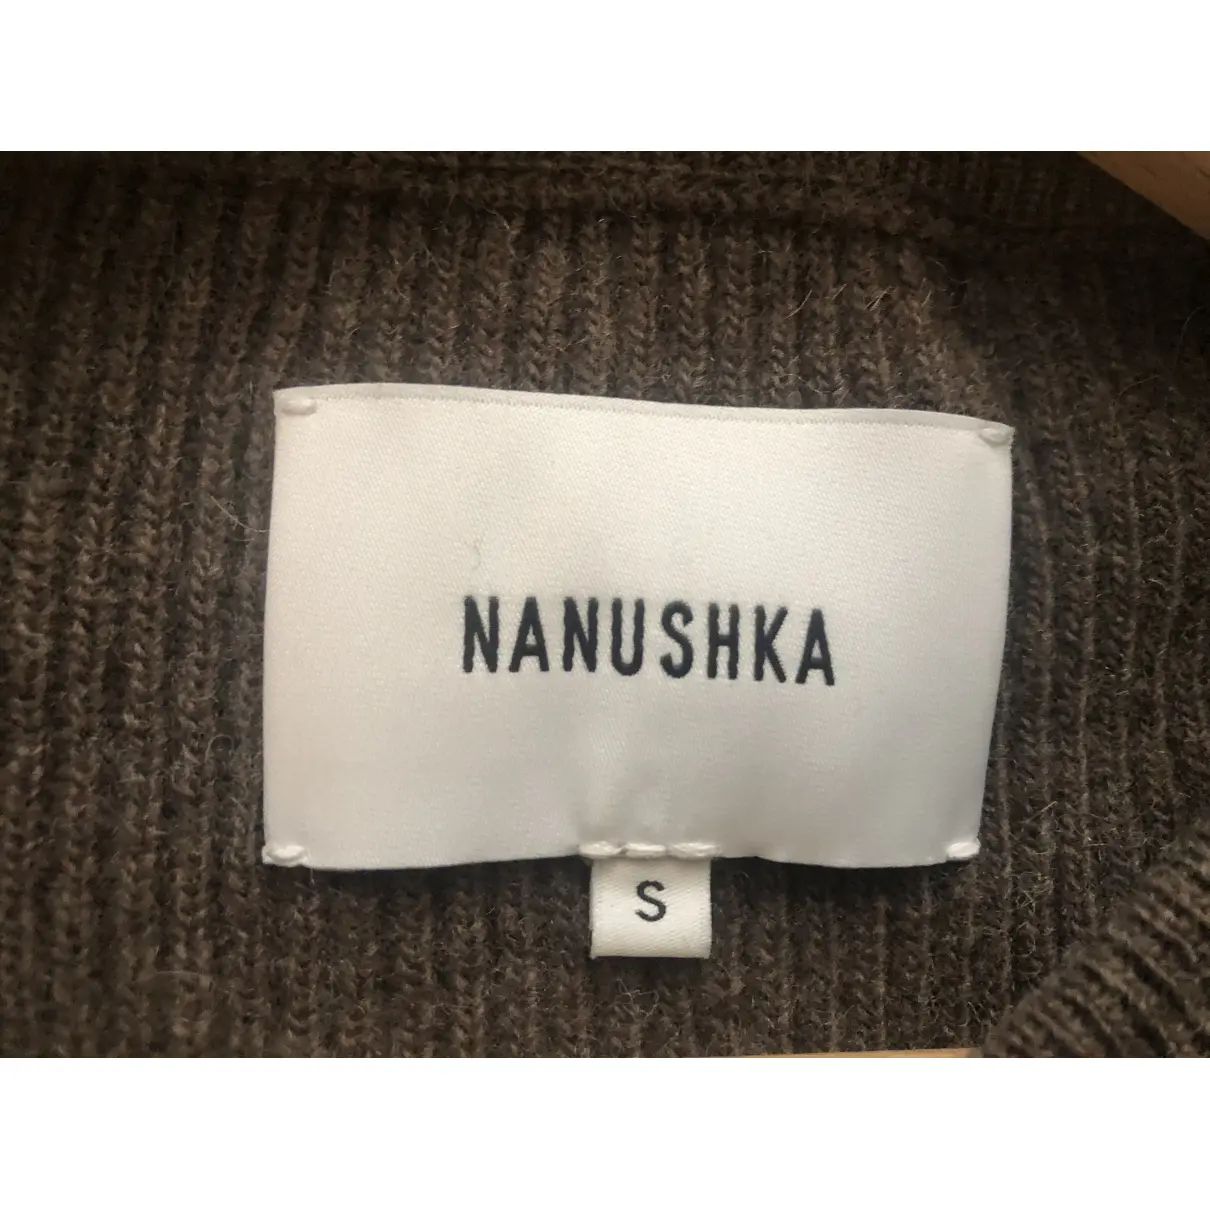 Buy Nanushka Cashmere jumper online